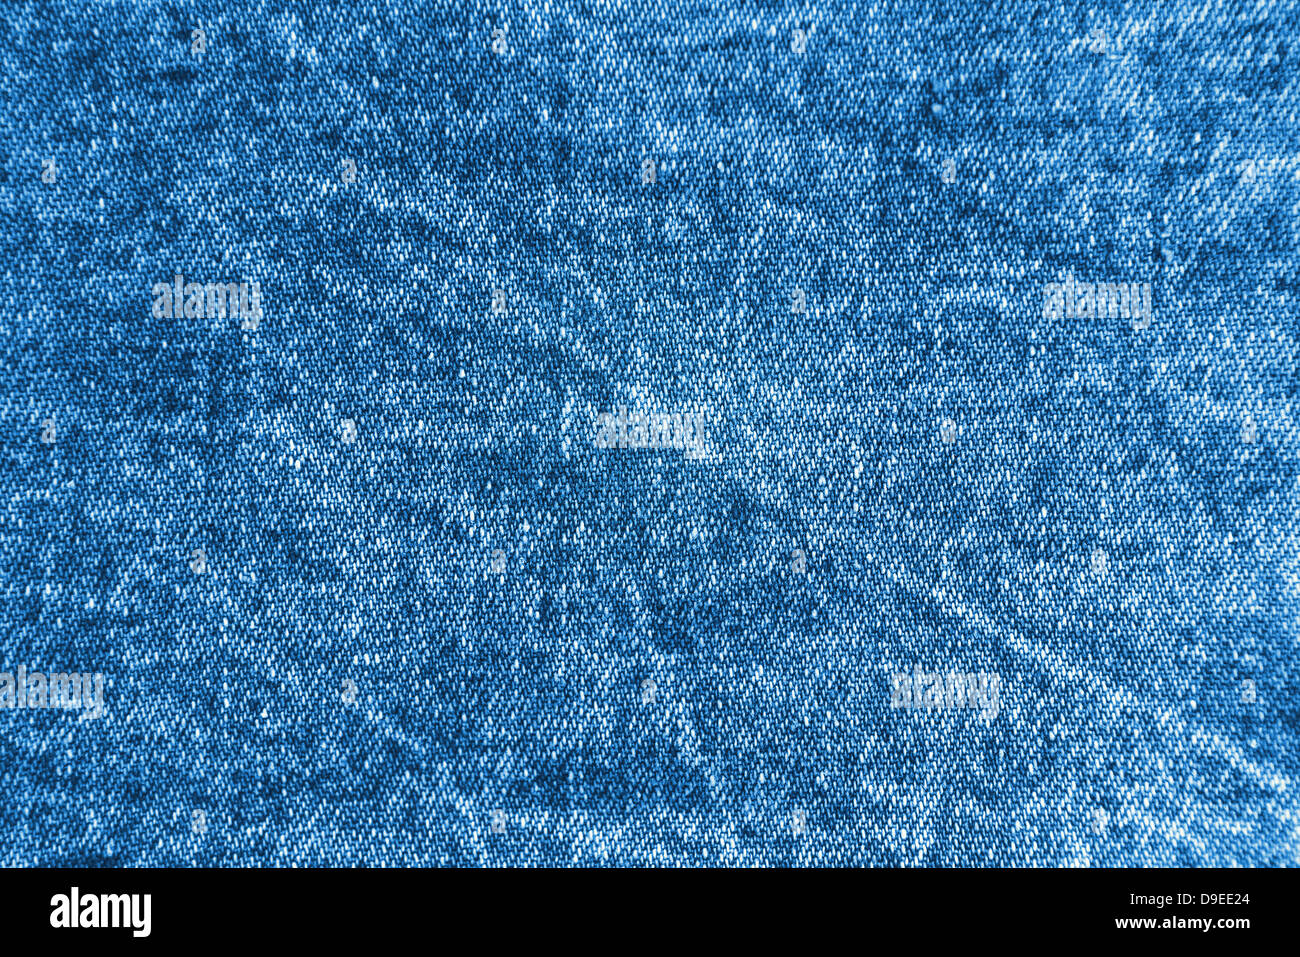 Blue denim jeans cloth texture as background Stock Photo - Alamy